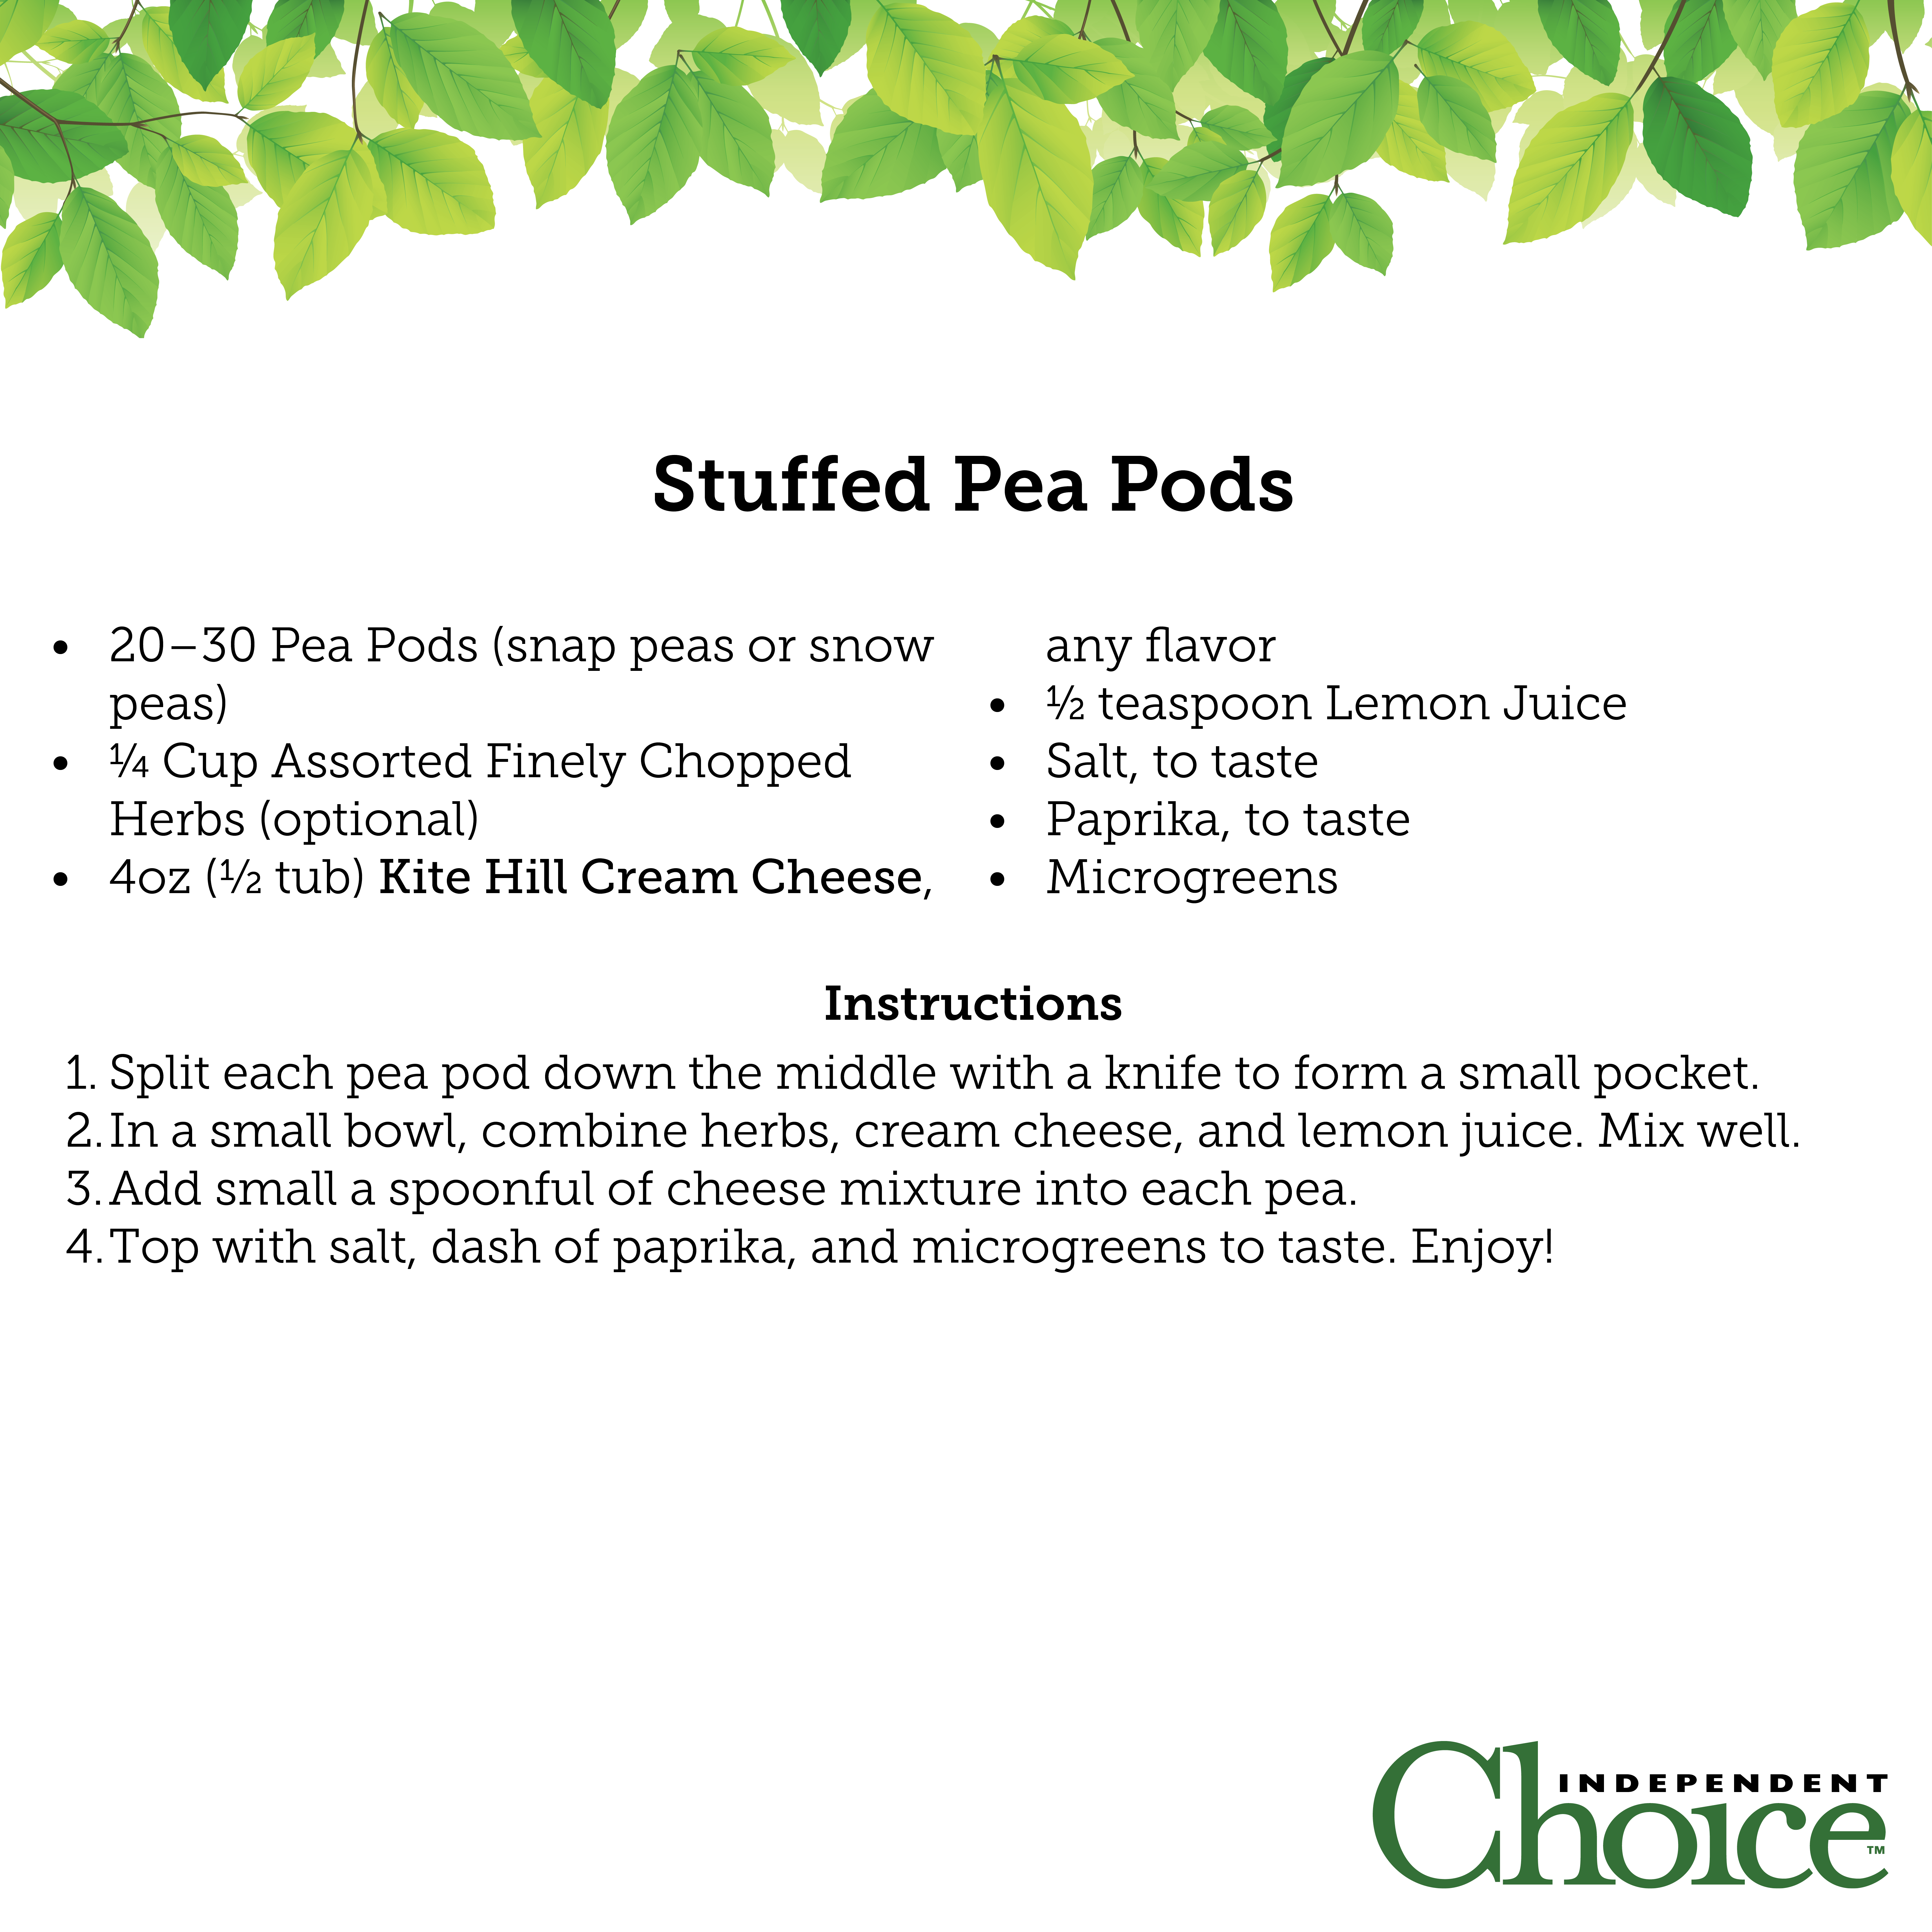 Stuffed Pea Pods